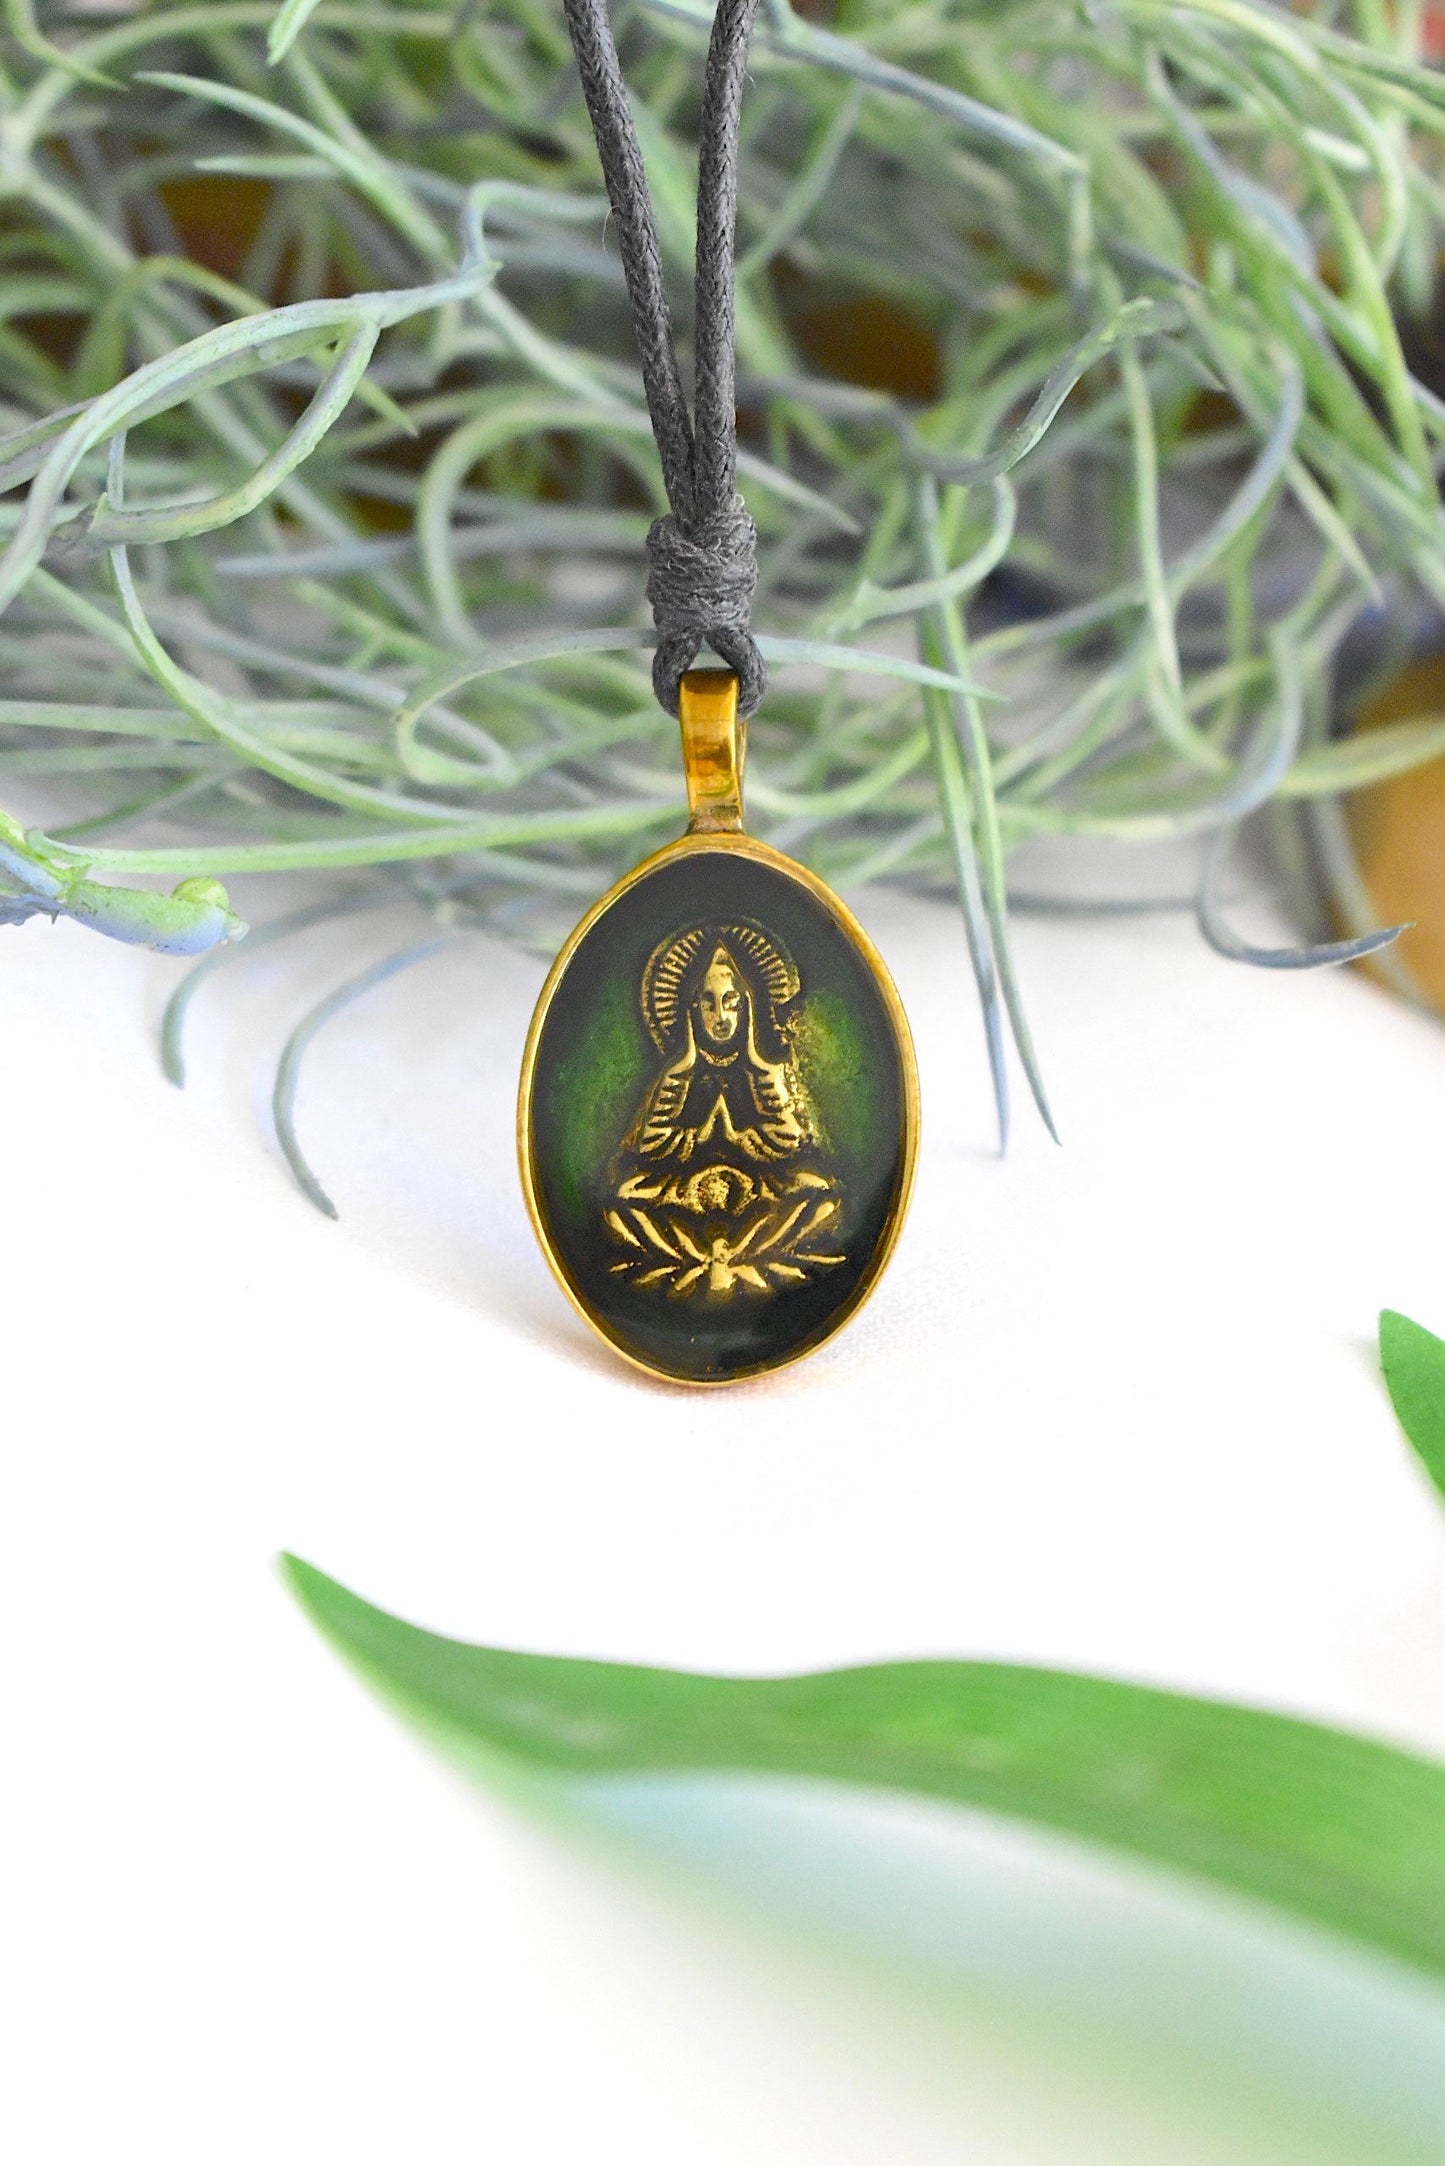 Guan Yin Goddess Meditating On Lotus Throne Brass Charm Necklace Pendant Jewelry